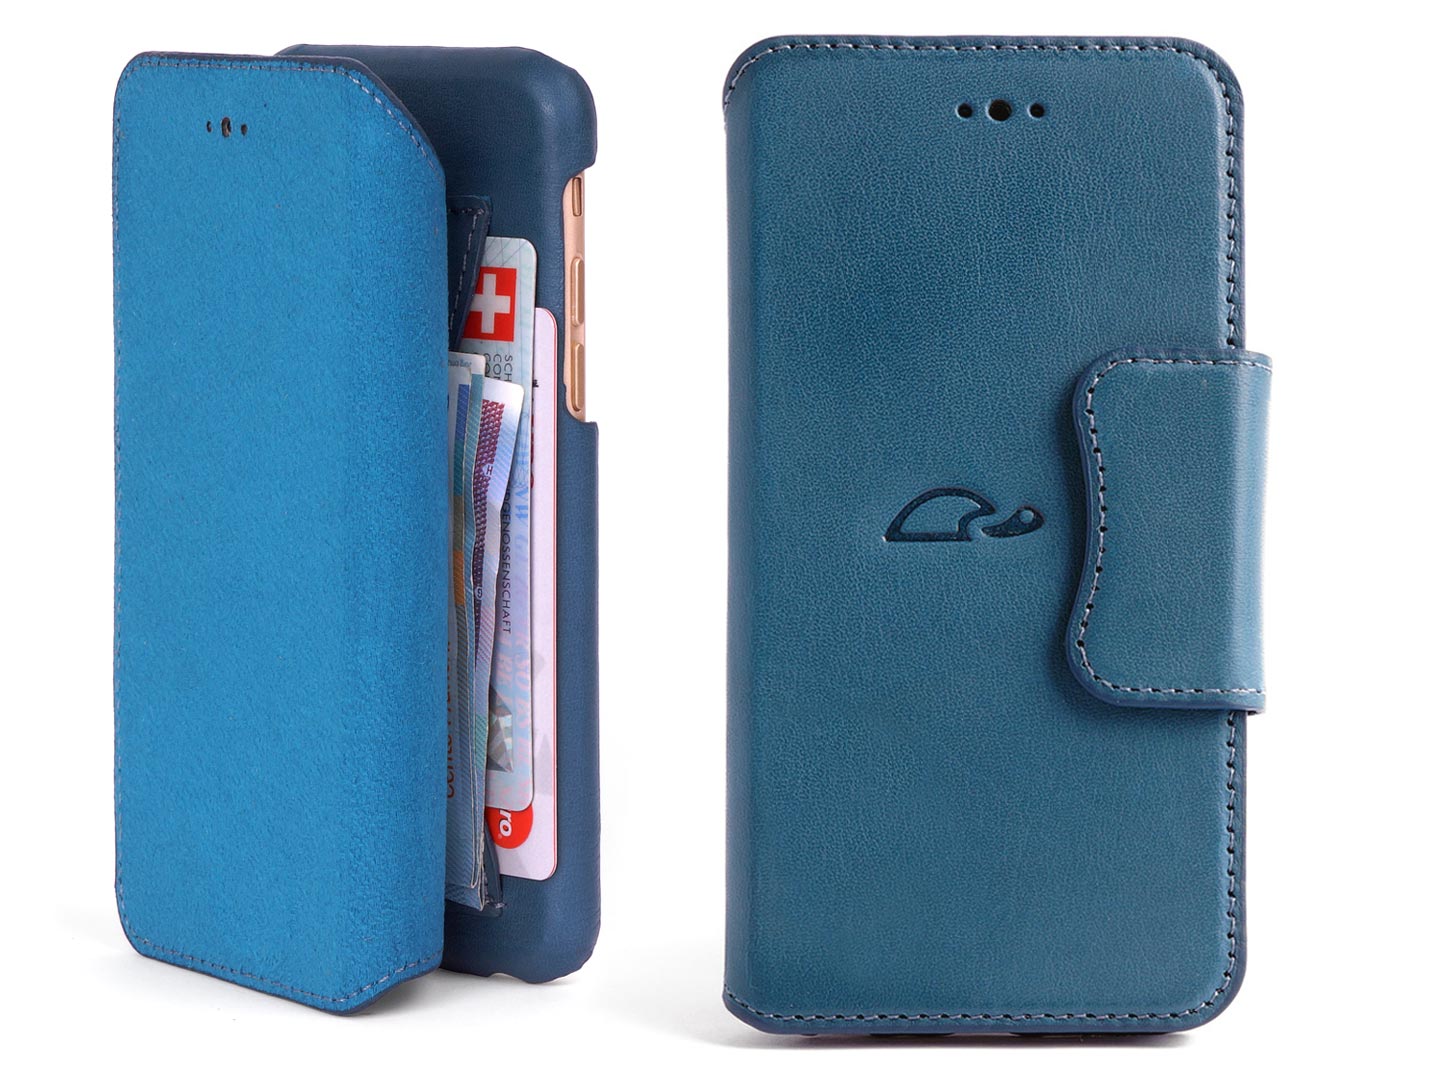 iPhone 6 Plus wallet case leather blue - front - Carapaz